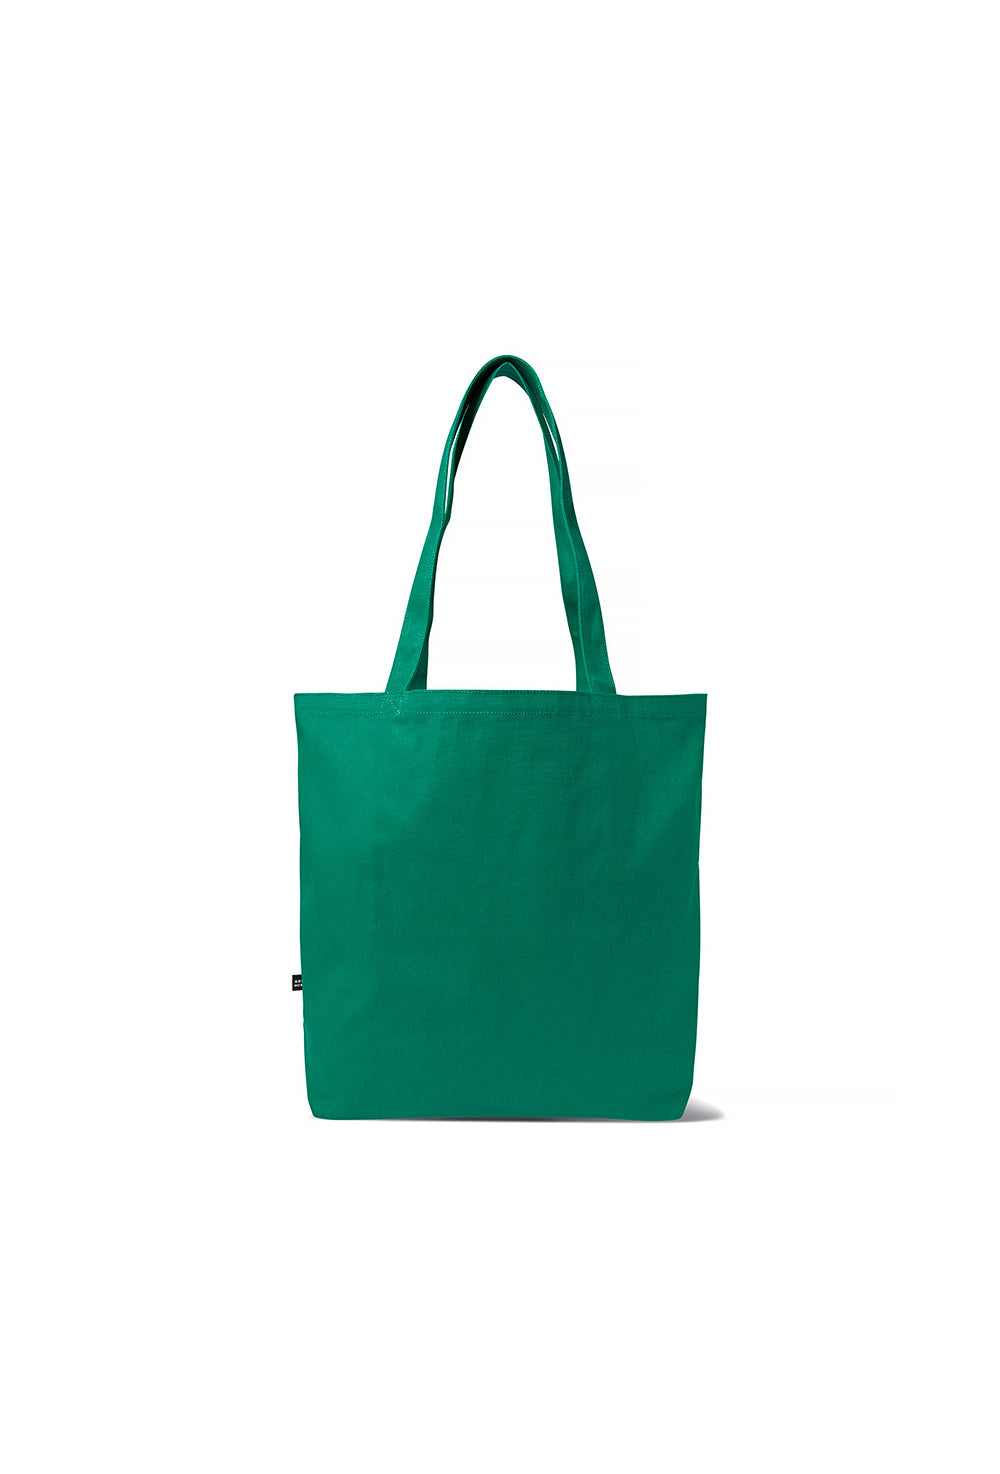 XXMX Eco Bag - Pepper Green